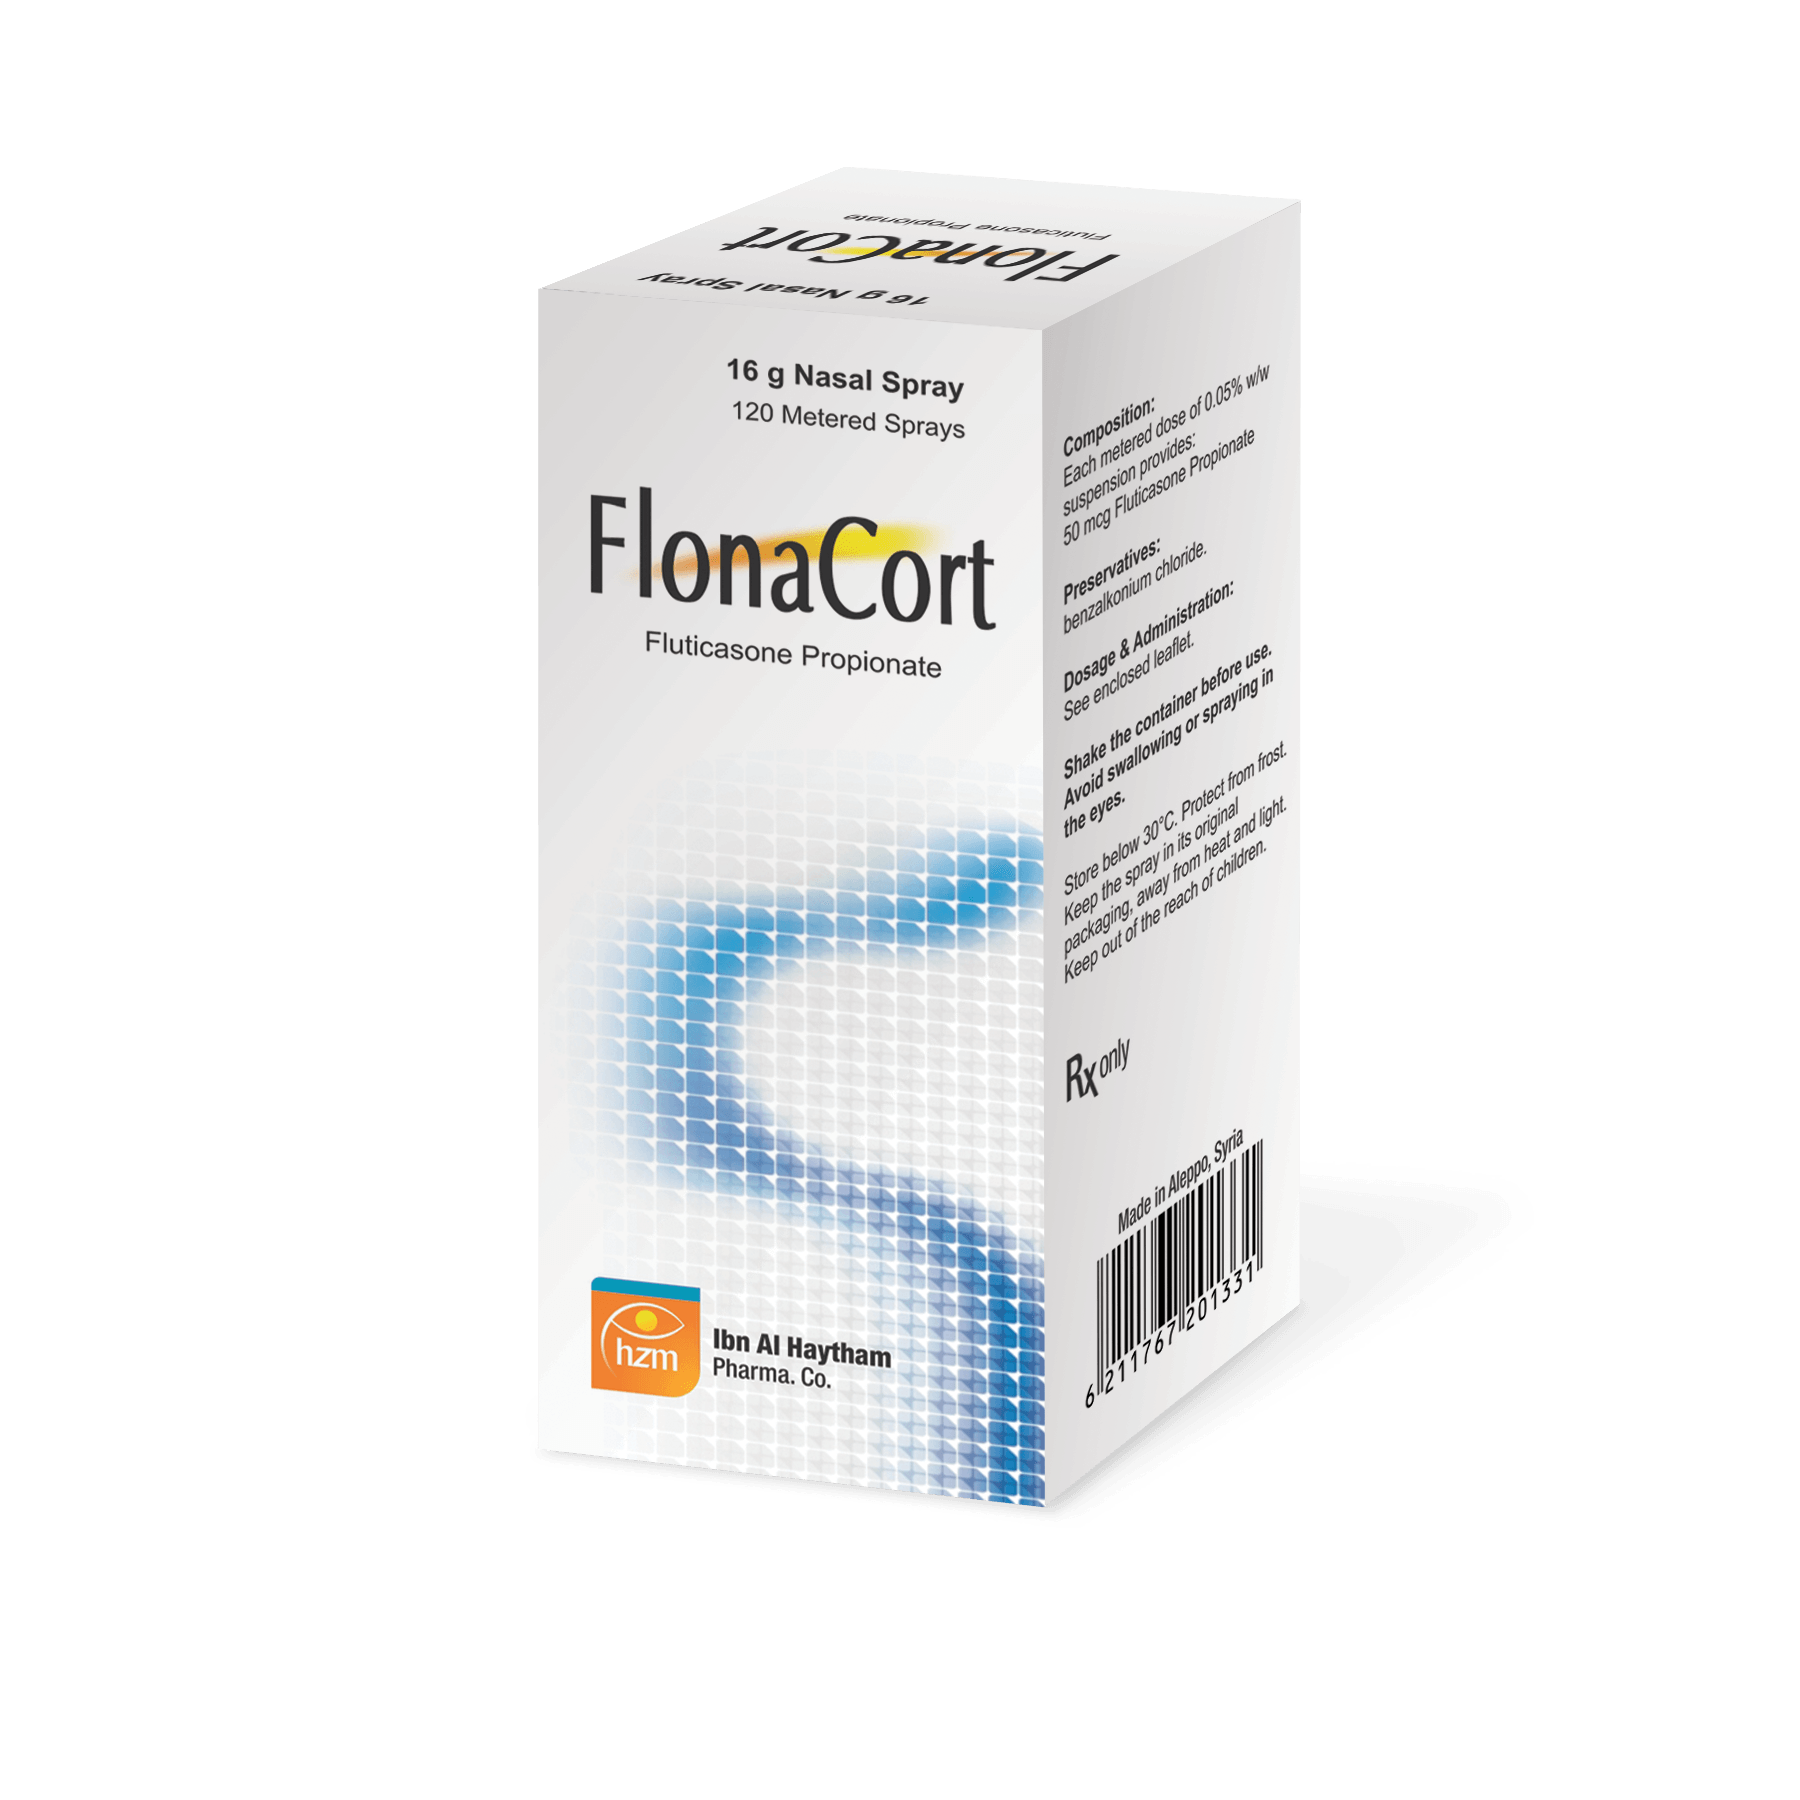 FlonaCort Nasal spray